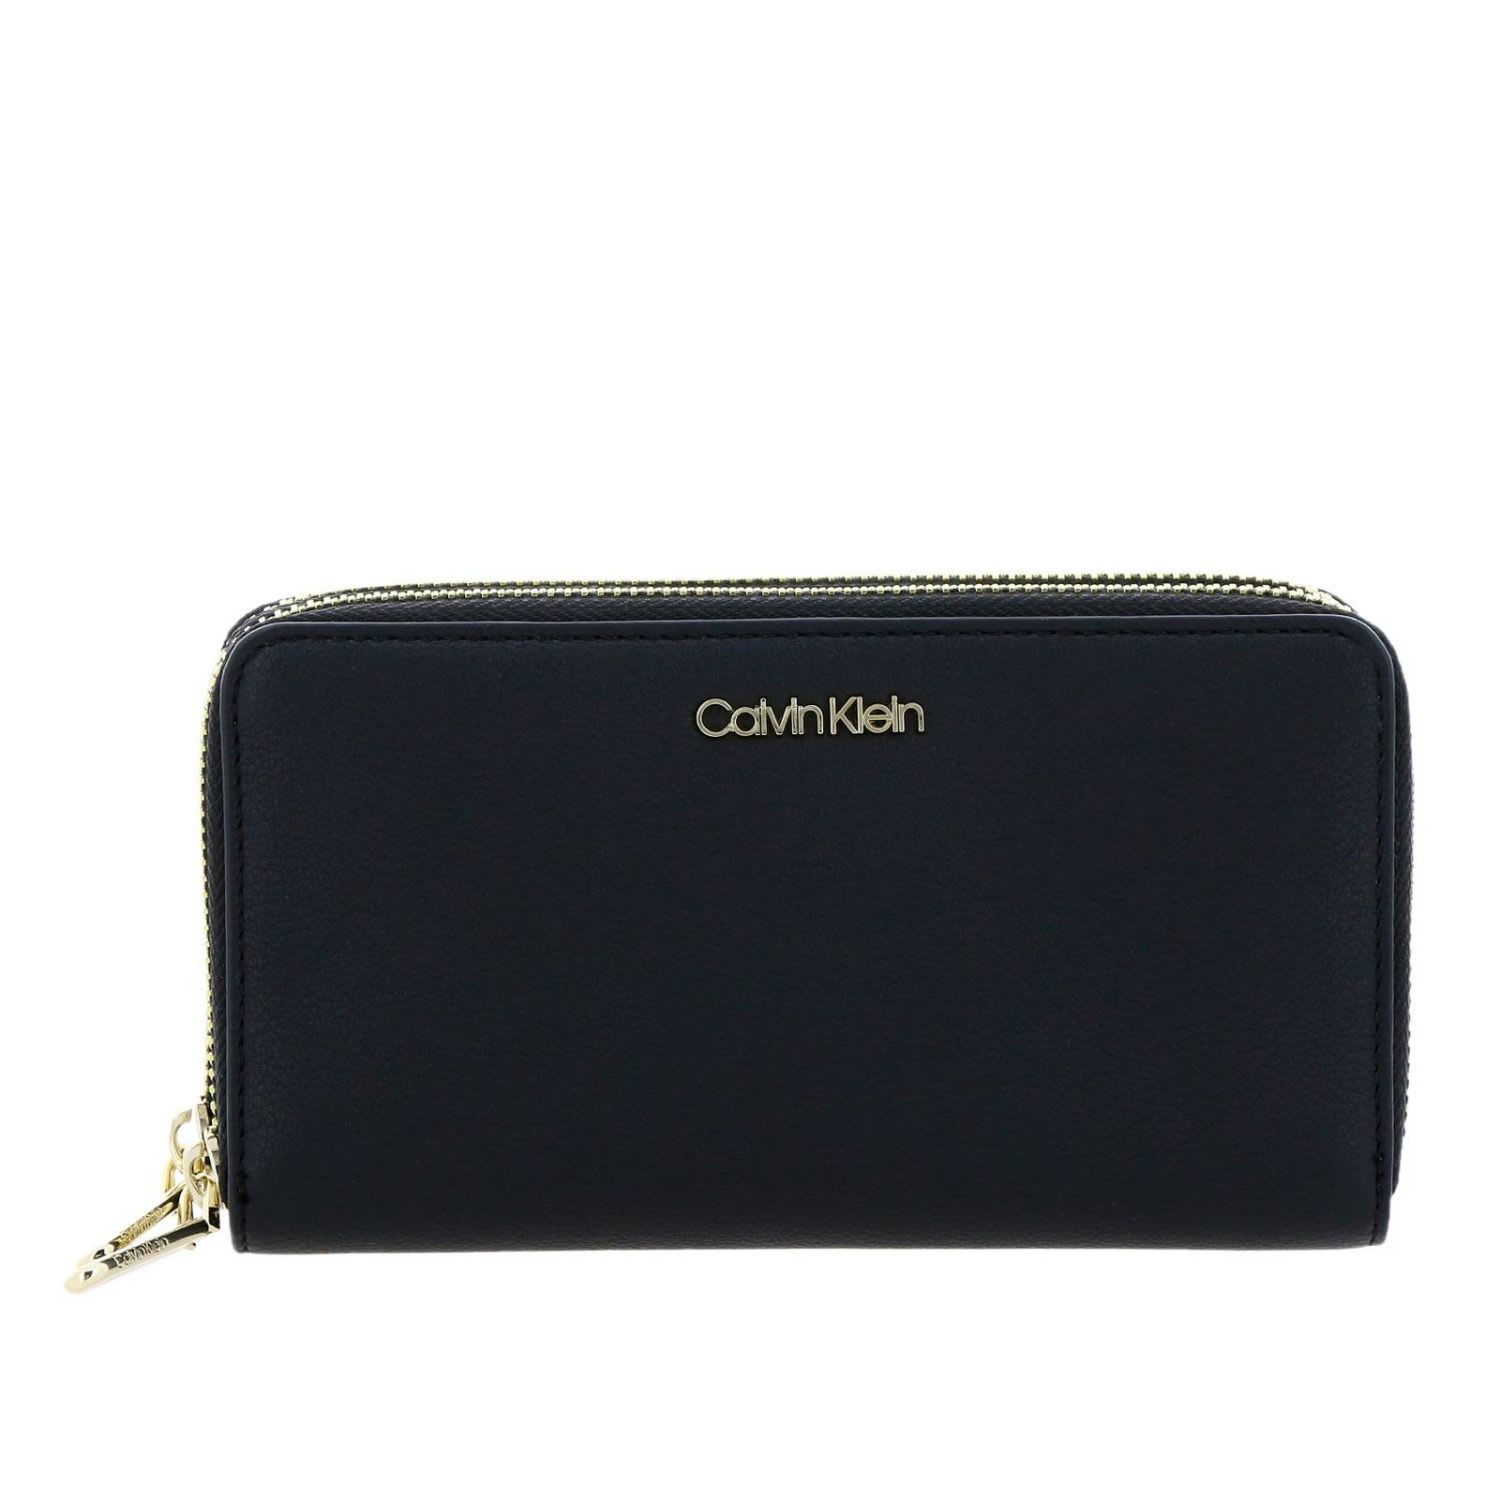 Calvin Klein Calvin Klein Wallet Wallet Women Calvin Klein - black ...